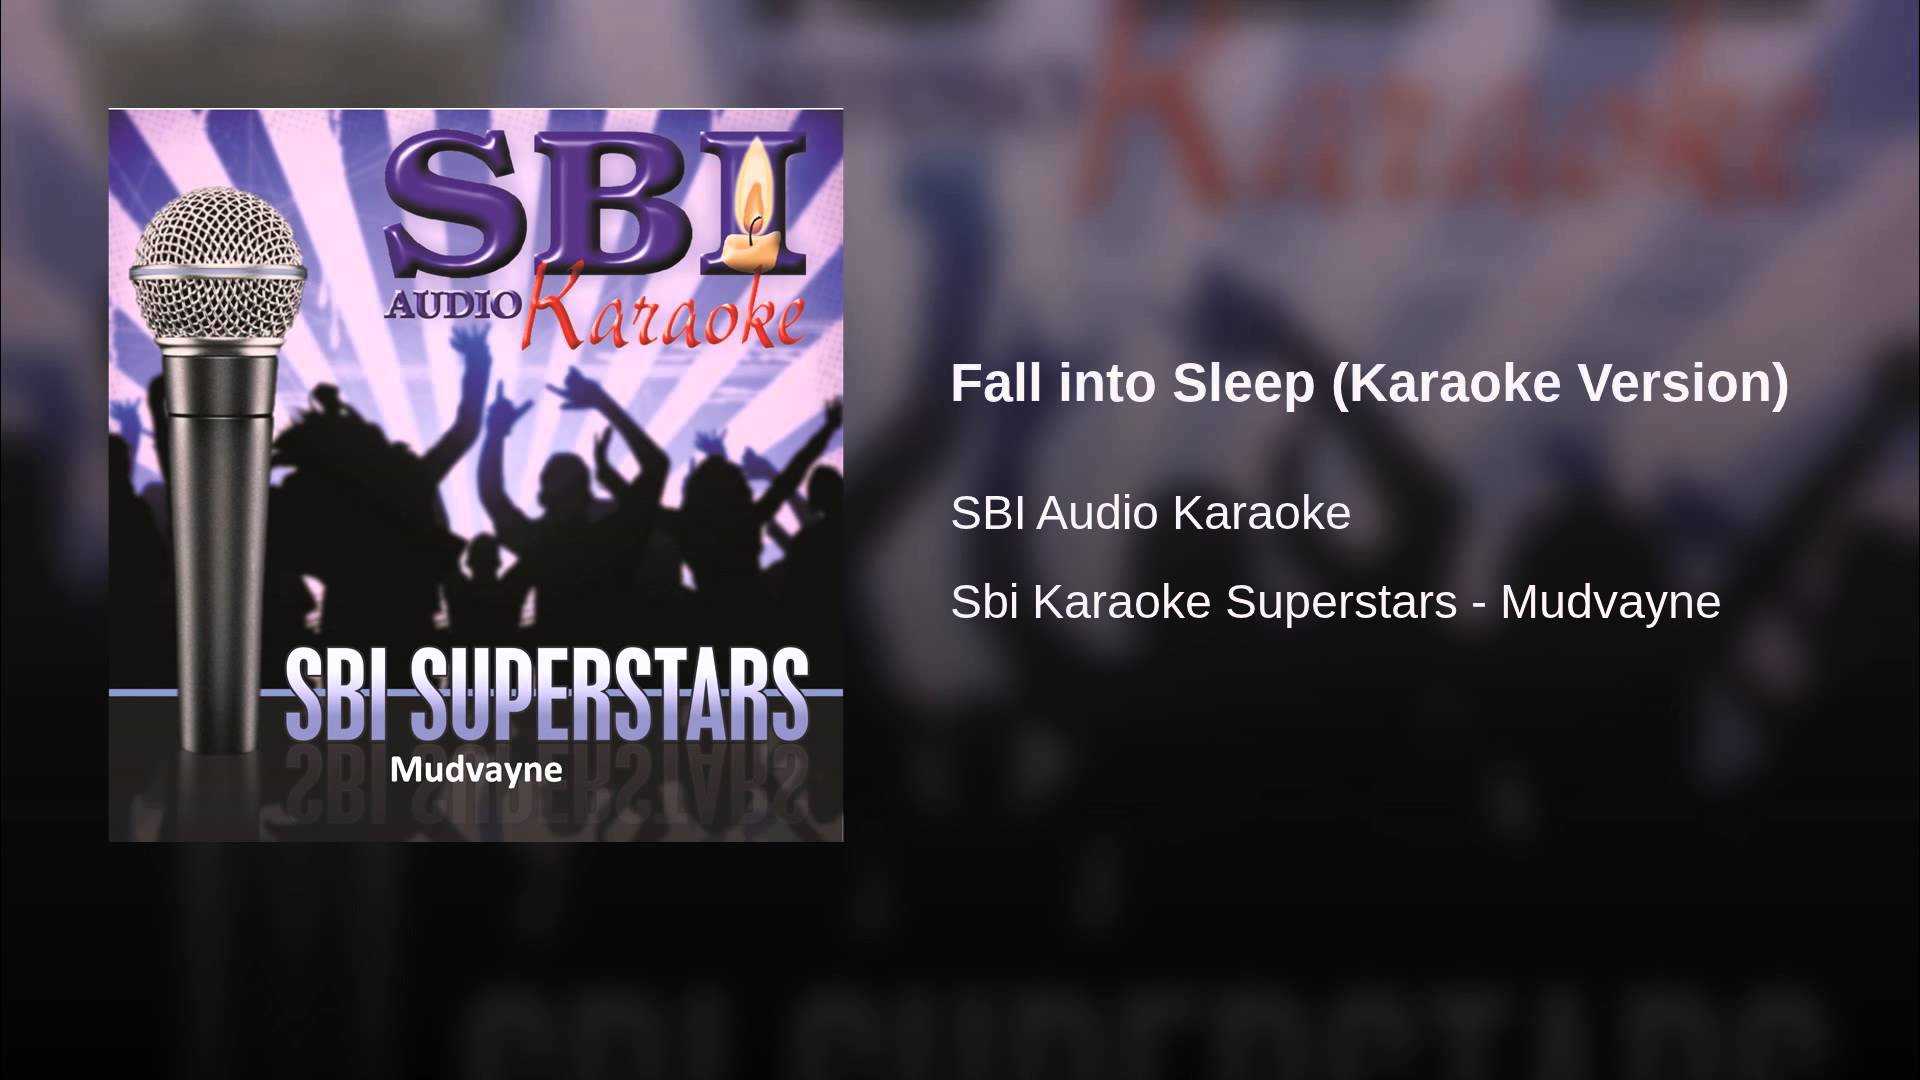 Fall into Sleep (Karaoke Version) - YouTube